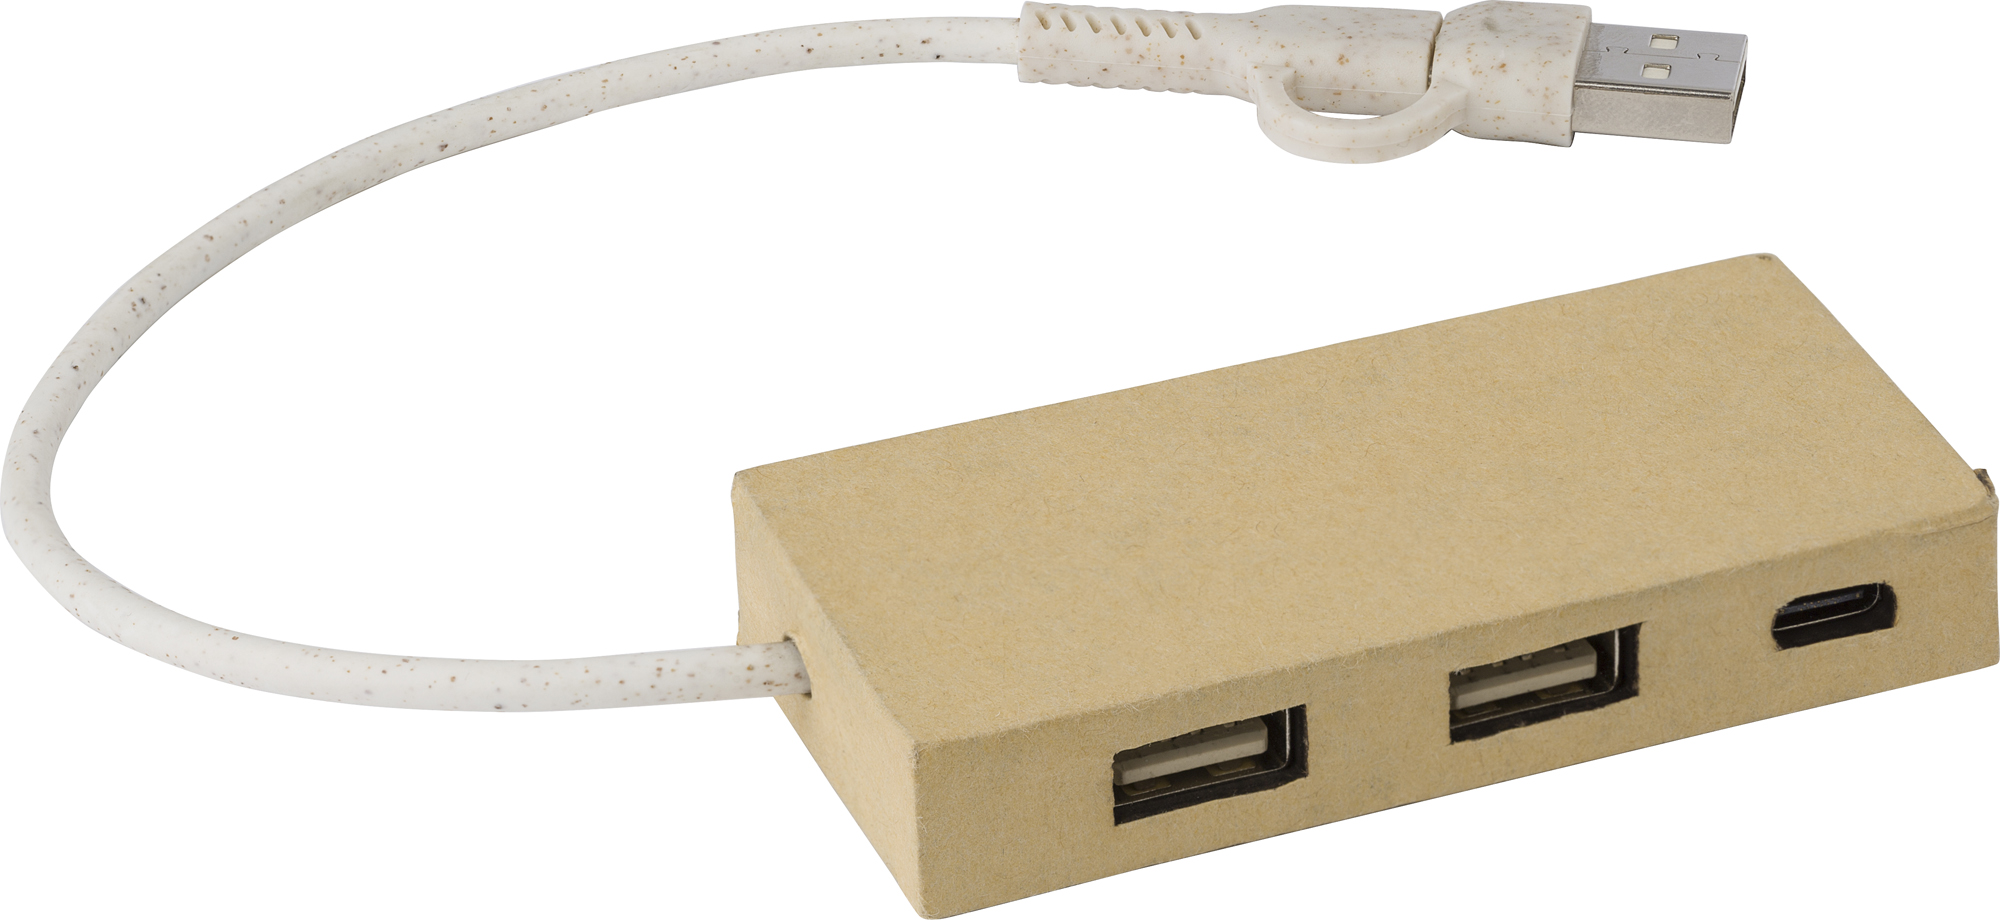 000000976588 011999999 3d135 lft pro01 2023 fal - Aluminium and recycled paper USB hub